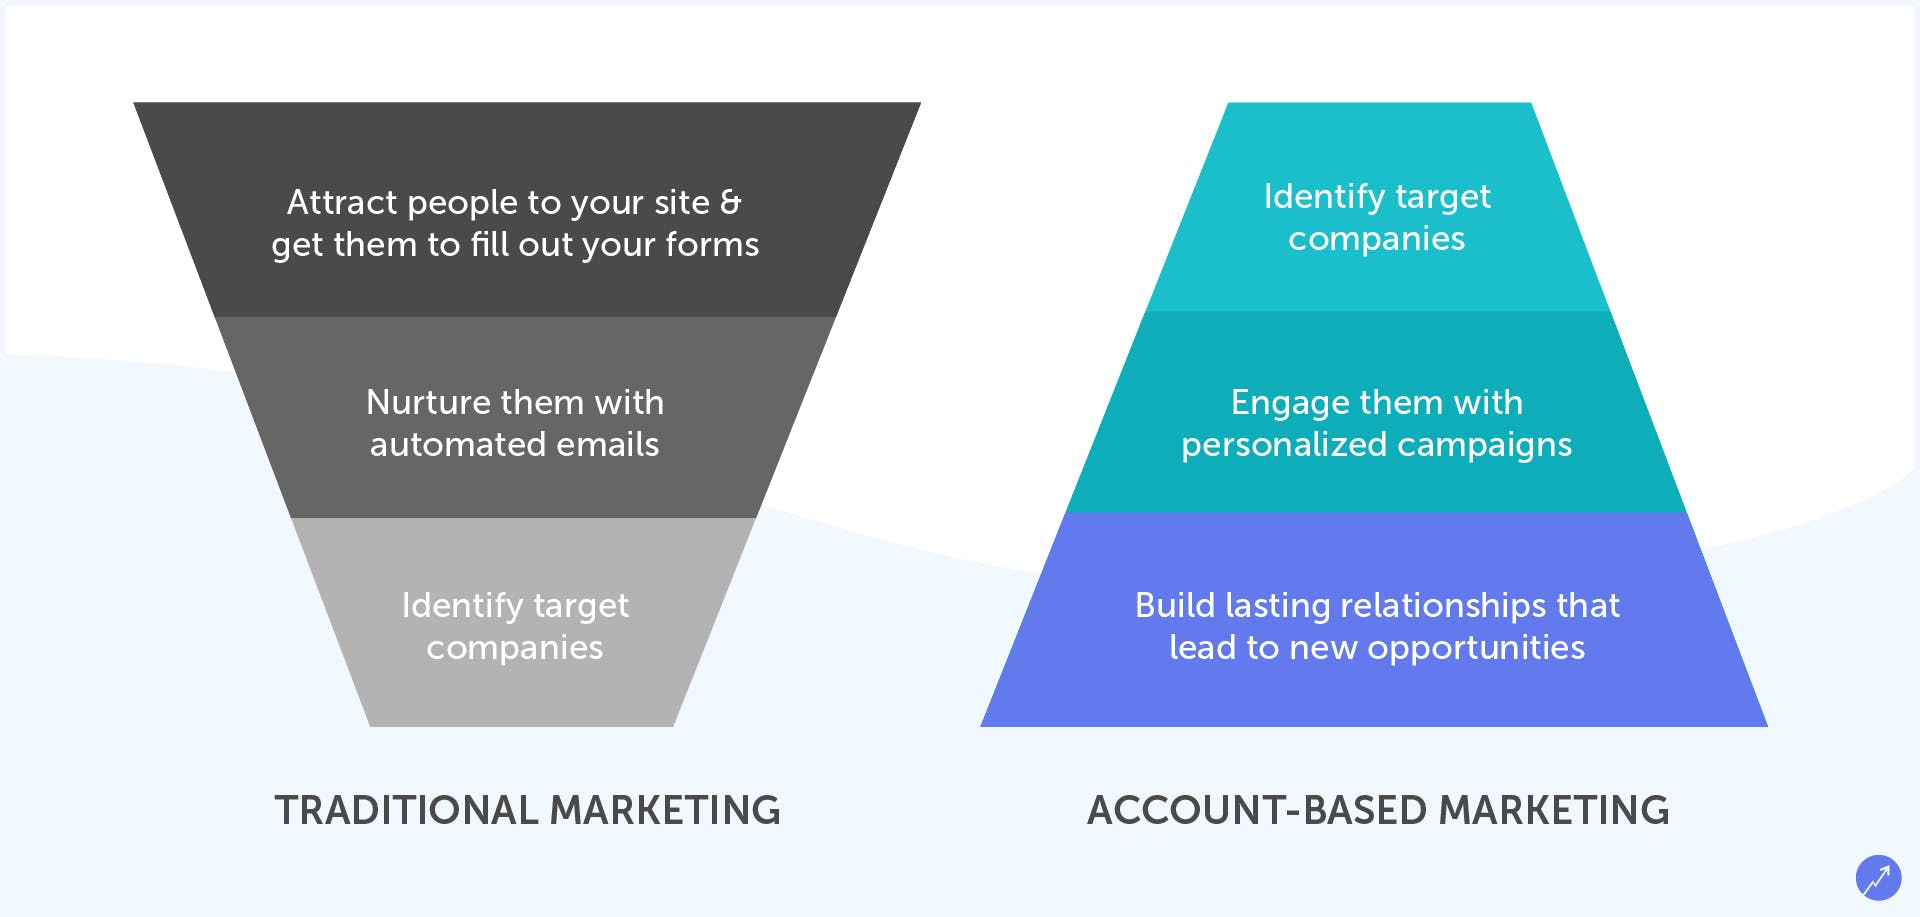 visual explaining traditional marketing vs account-based marketing.